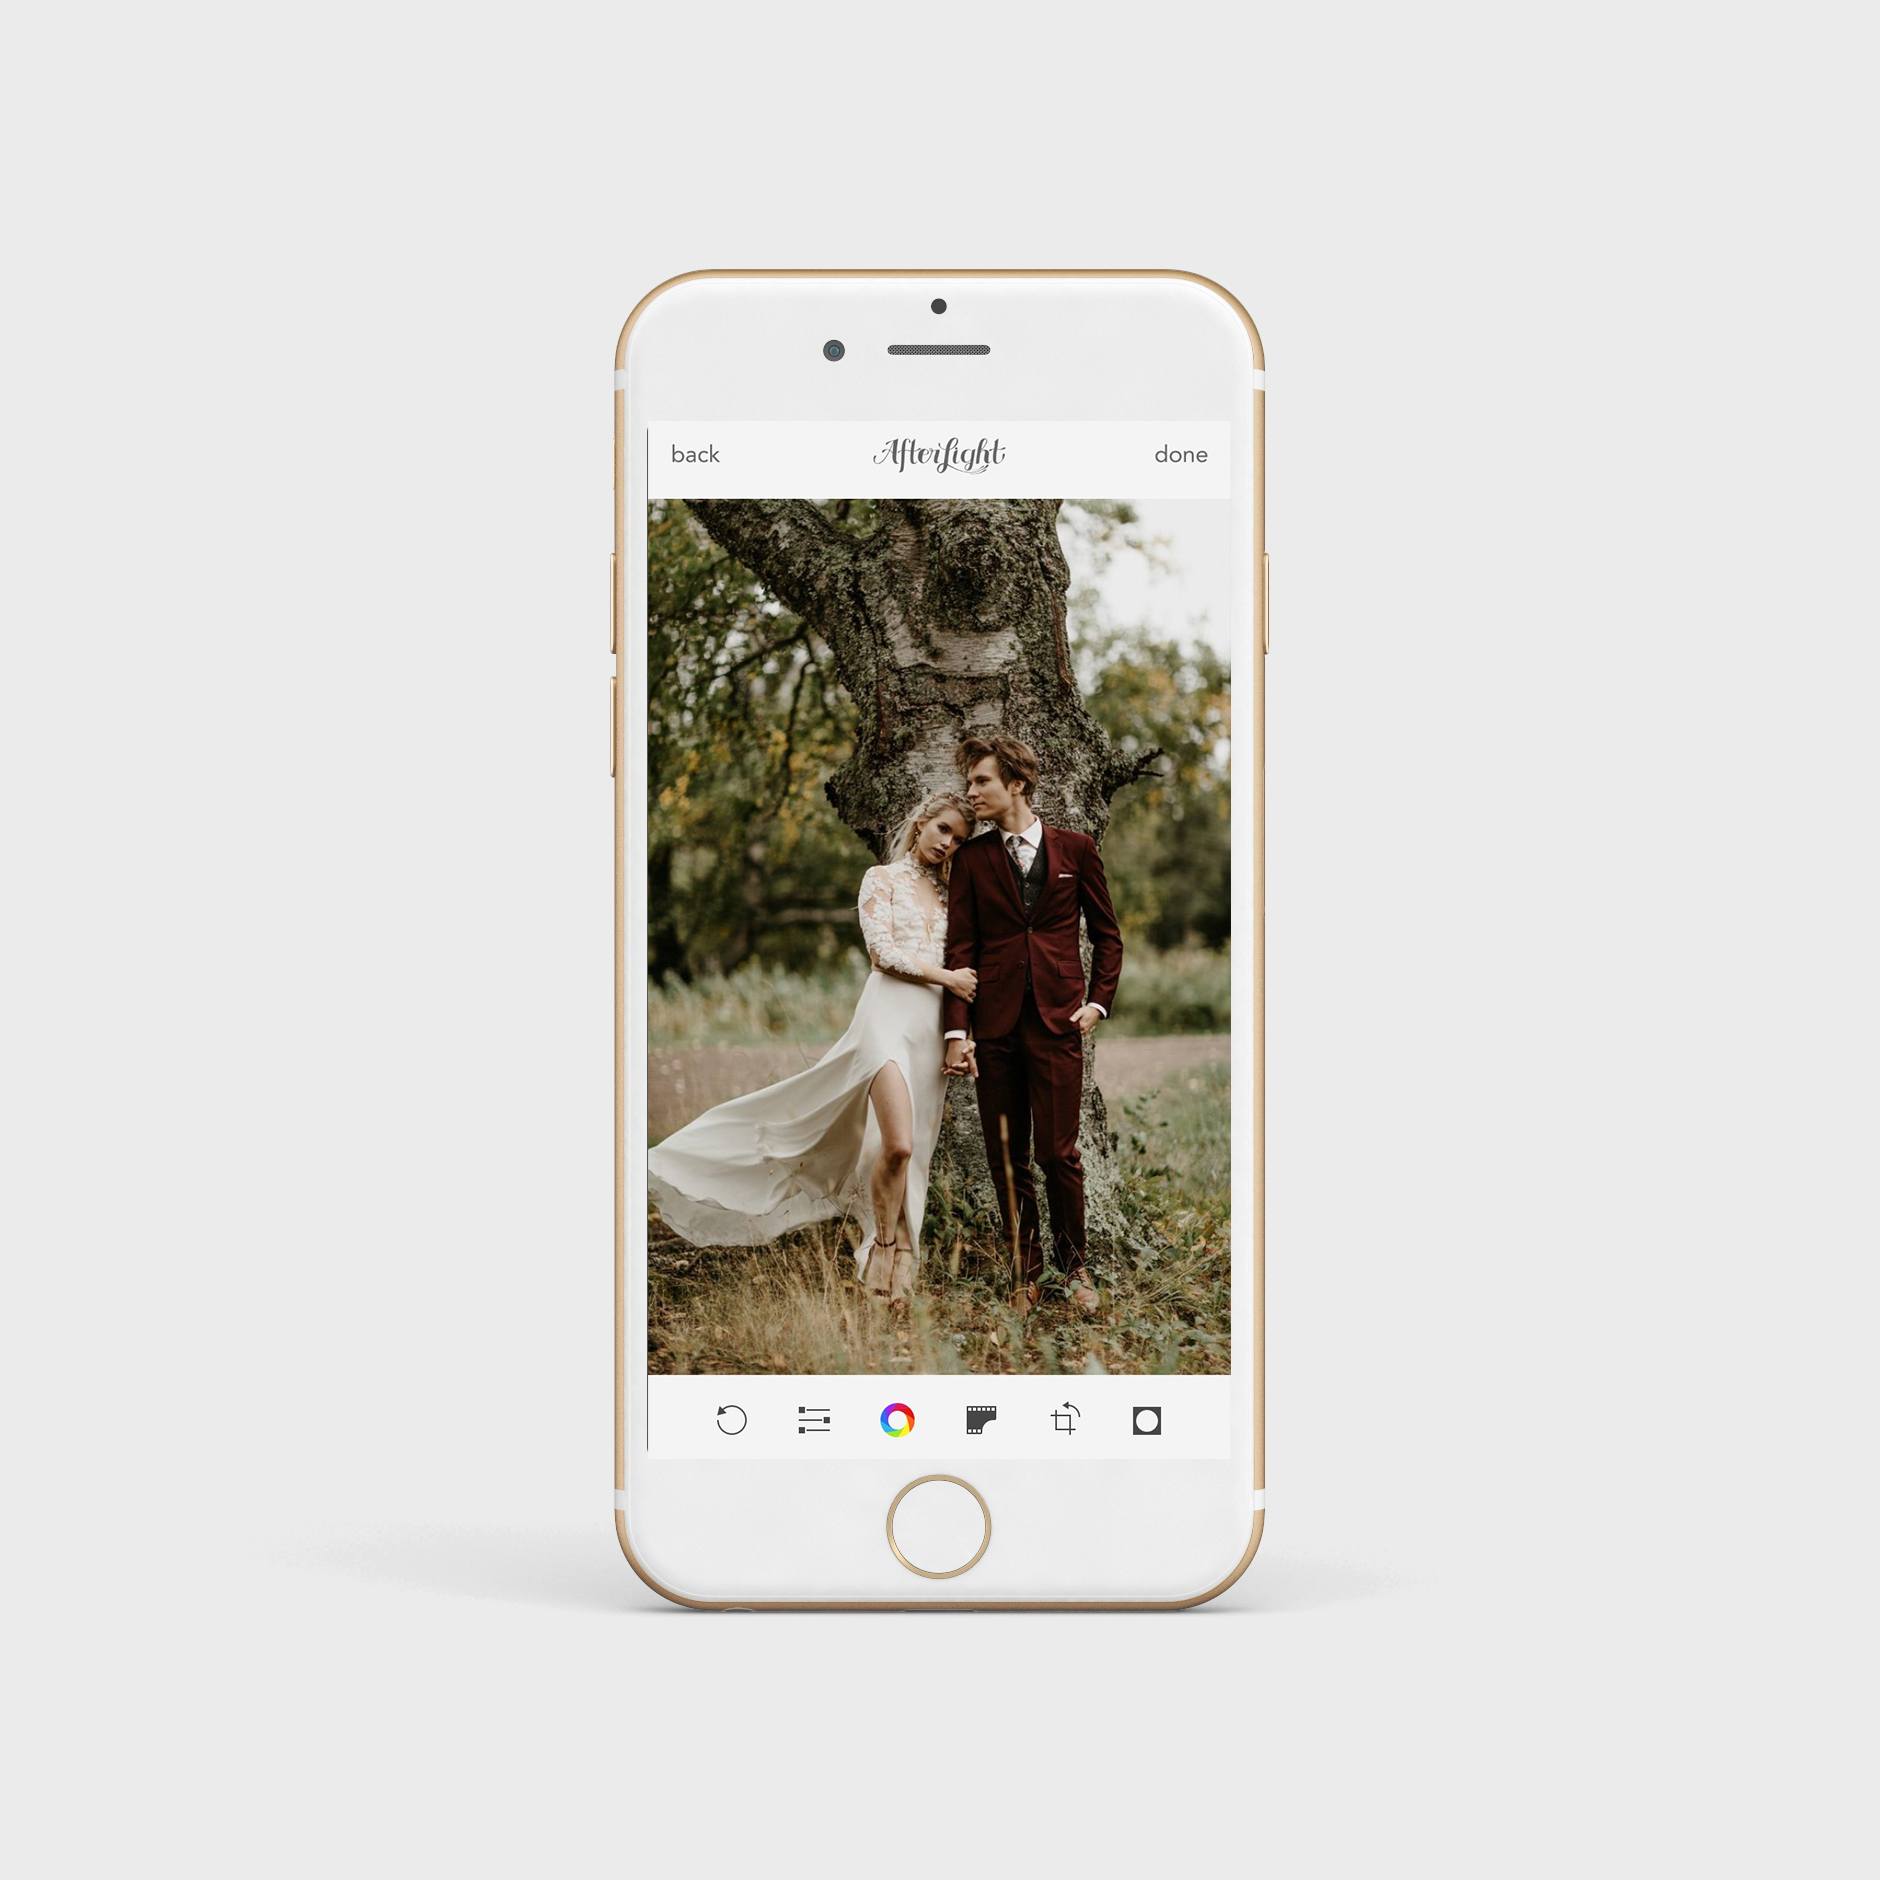 Afterlight App for Instagram Stories